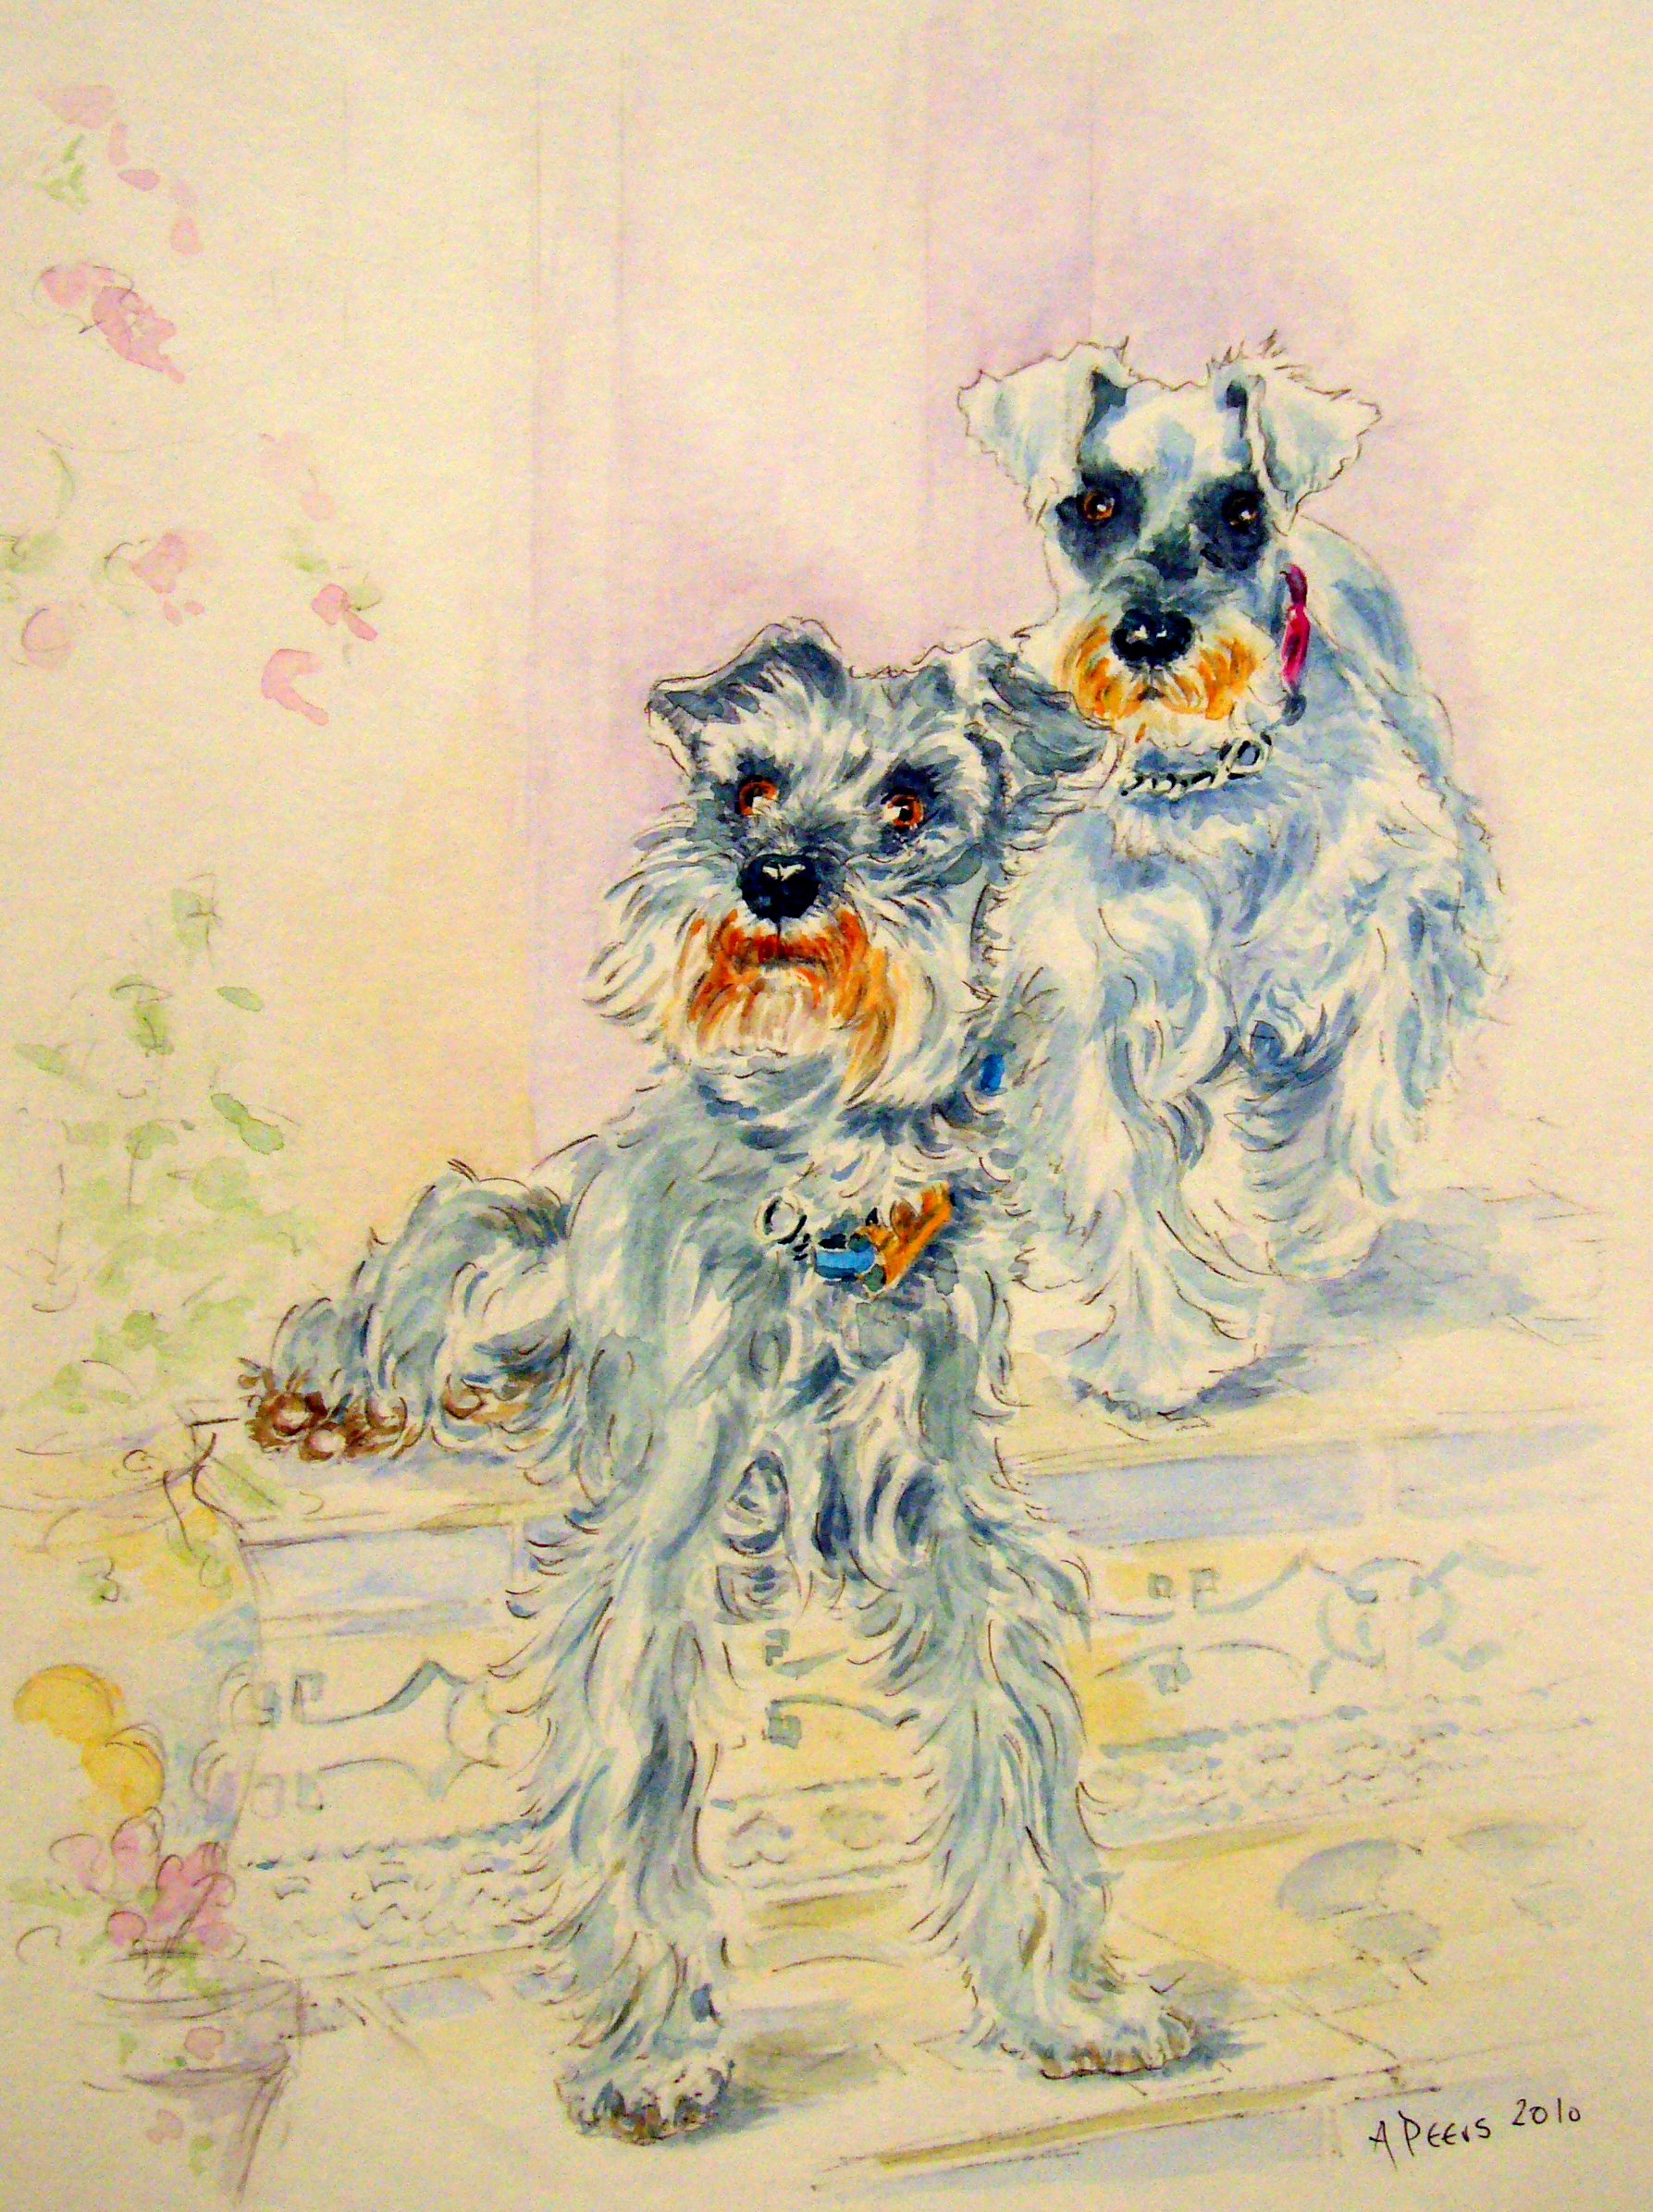 Watercolour pet portrait - 2 schnauzers Jack and Beryl SOLD